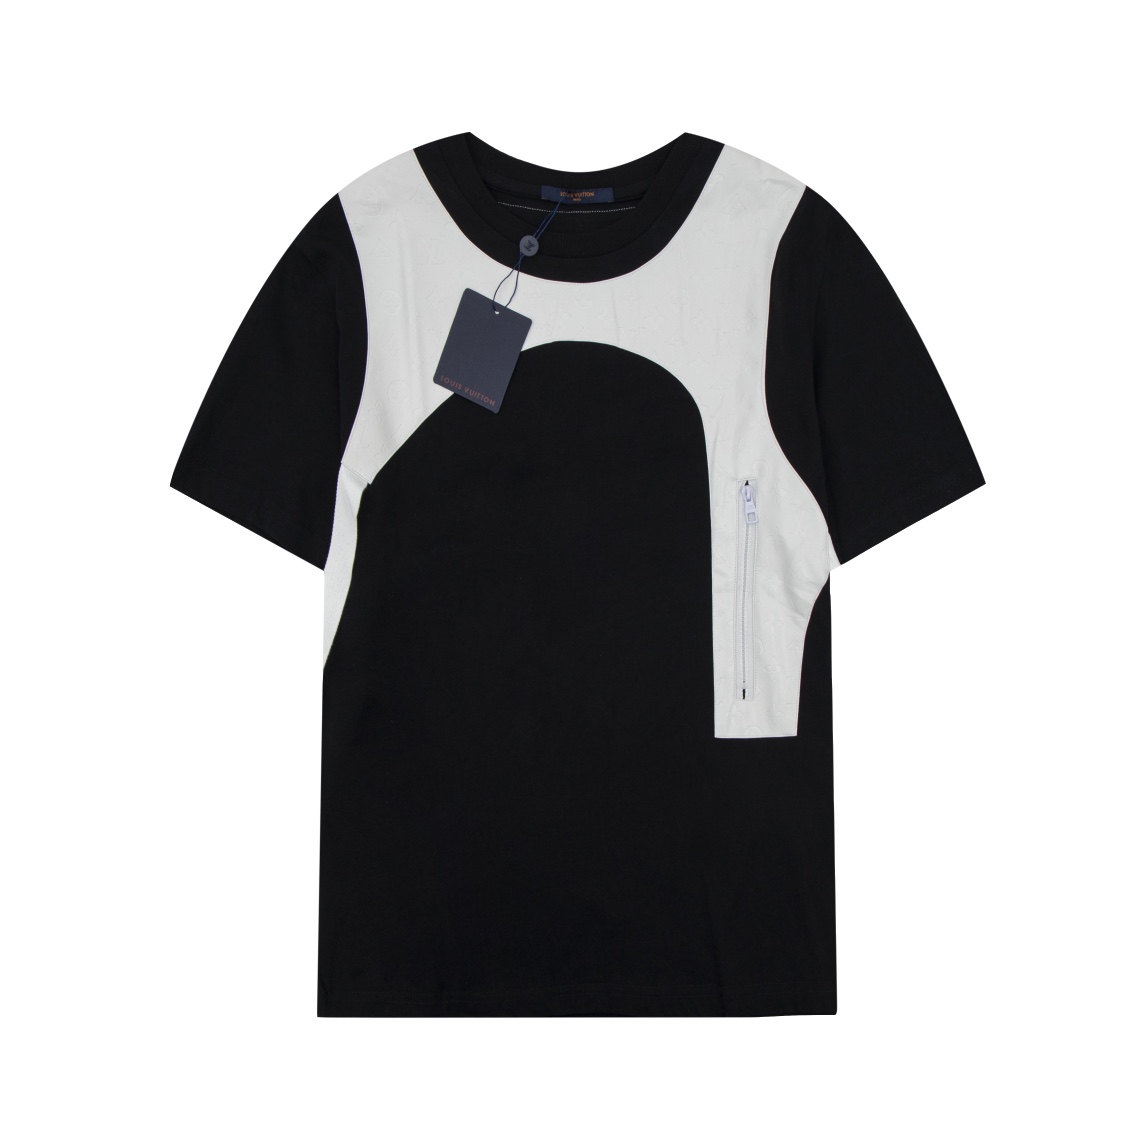 Louis Vuitton Clothing T-Shirt Waistcoats Black White Splicing Cotton Fashion Short Sleeve